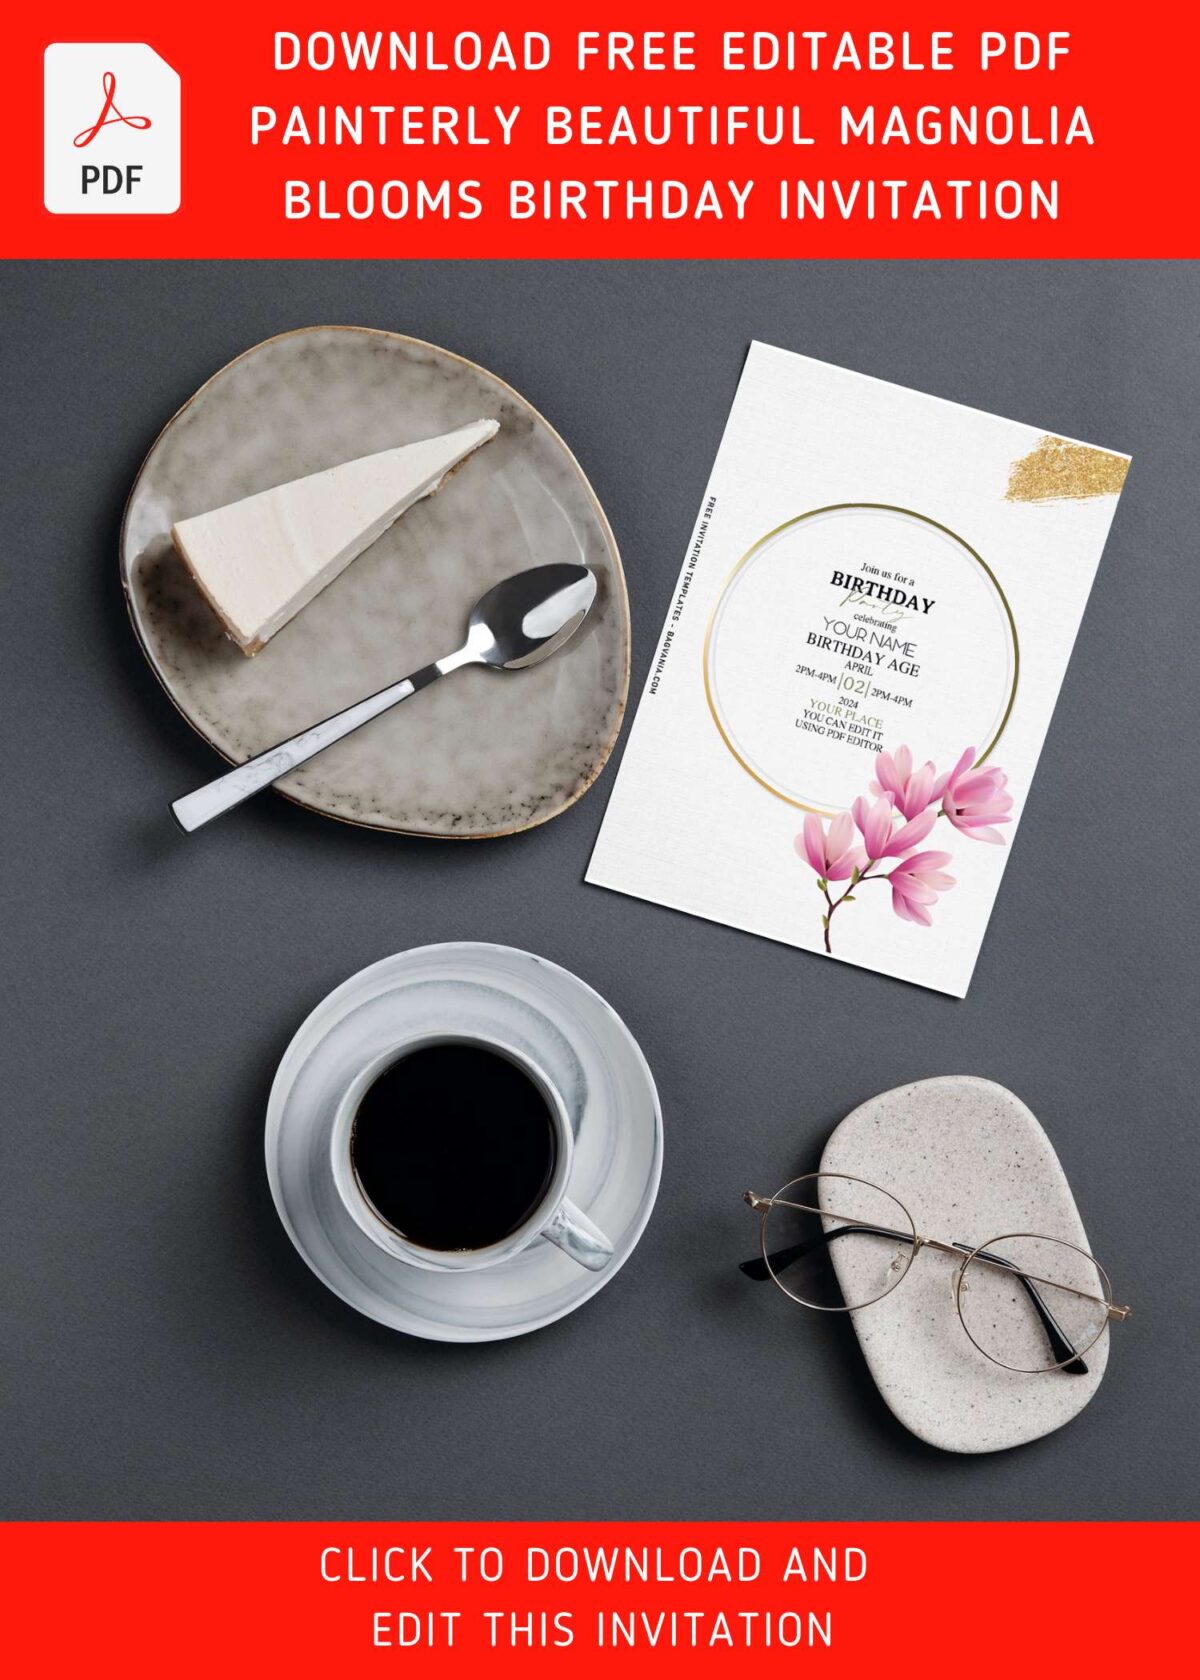 (Free Editable PDF) Enchanting Floral Frame Birthday Invitation Templates with aesthetic magnolia